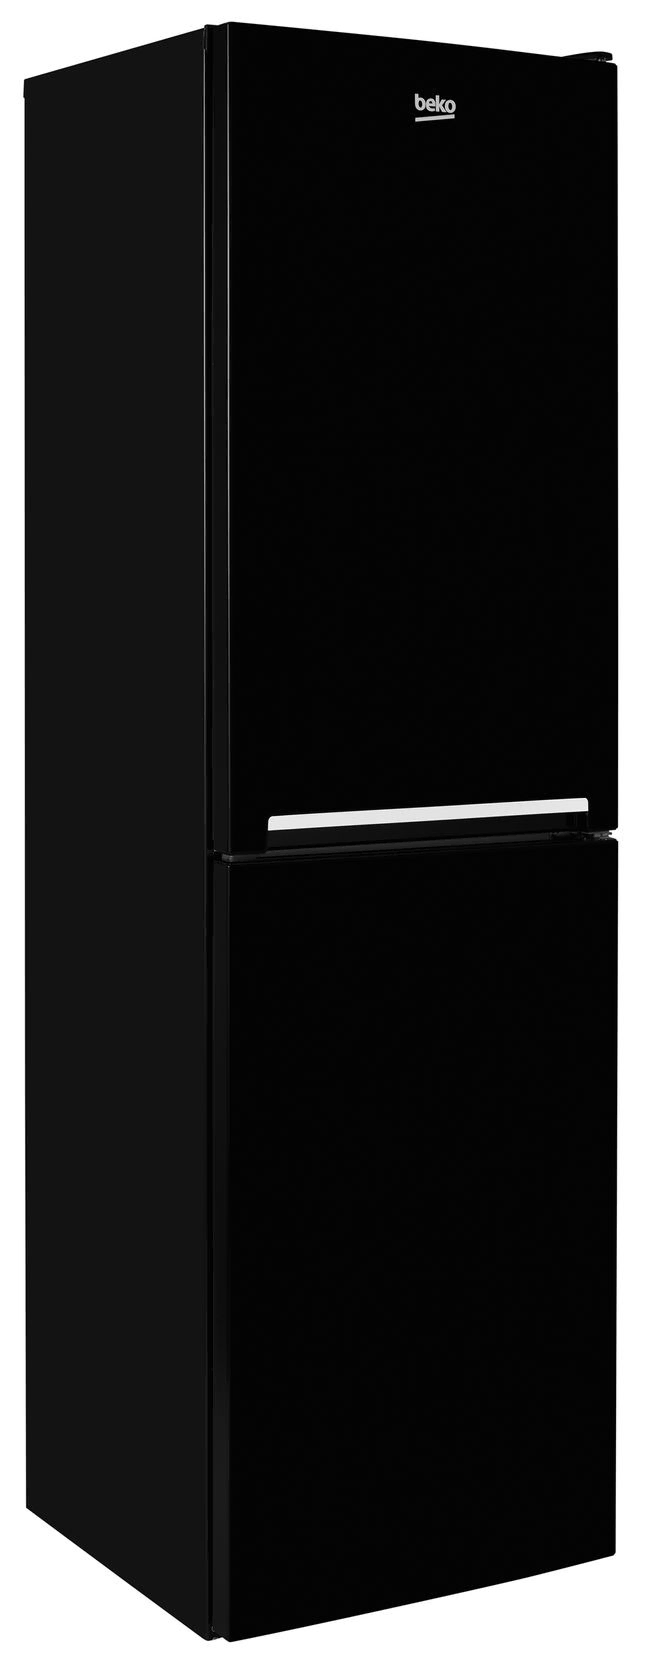 Beko CSG3582B Freestanding Combi Fridge Freezer